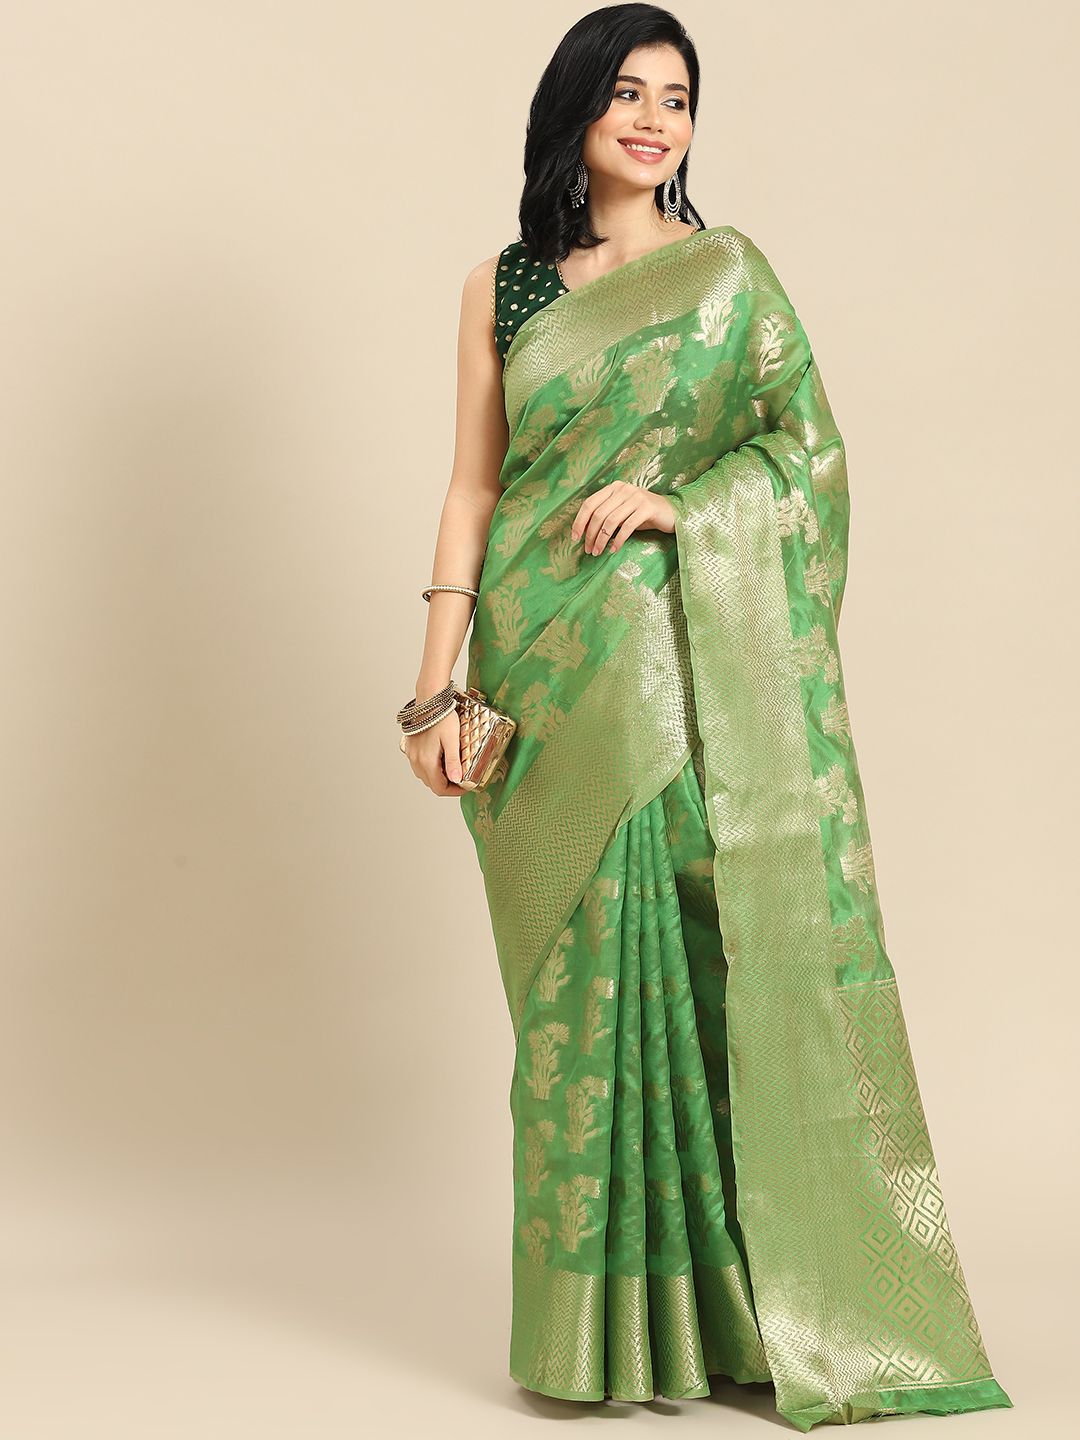 all about you Green & Golden Woven Design Banarasi Organza Saree Price in India